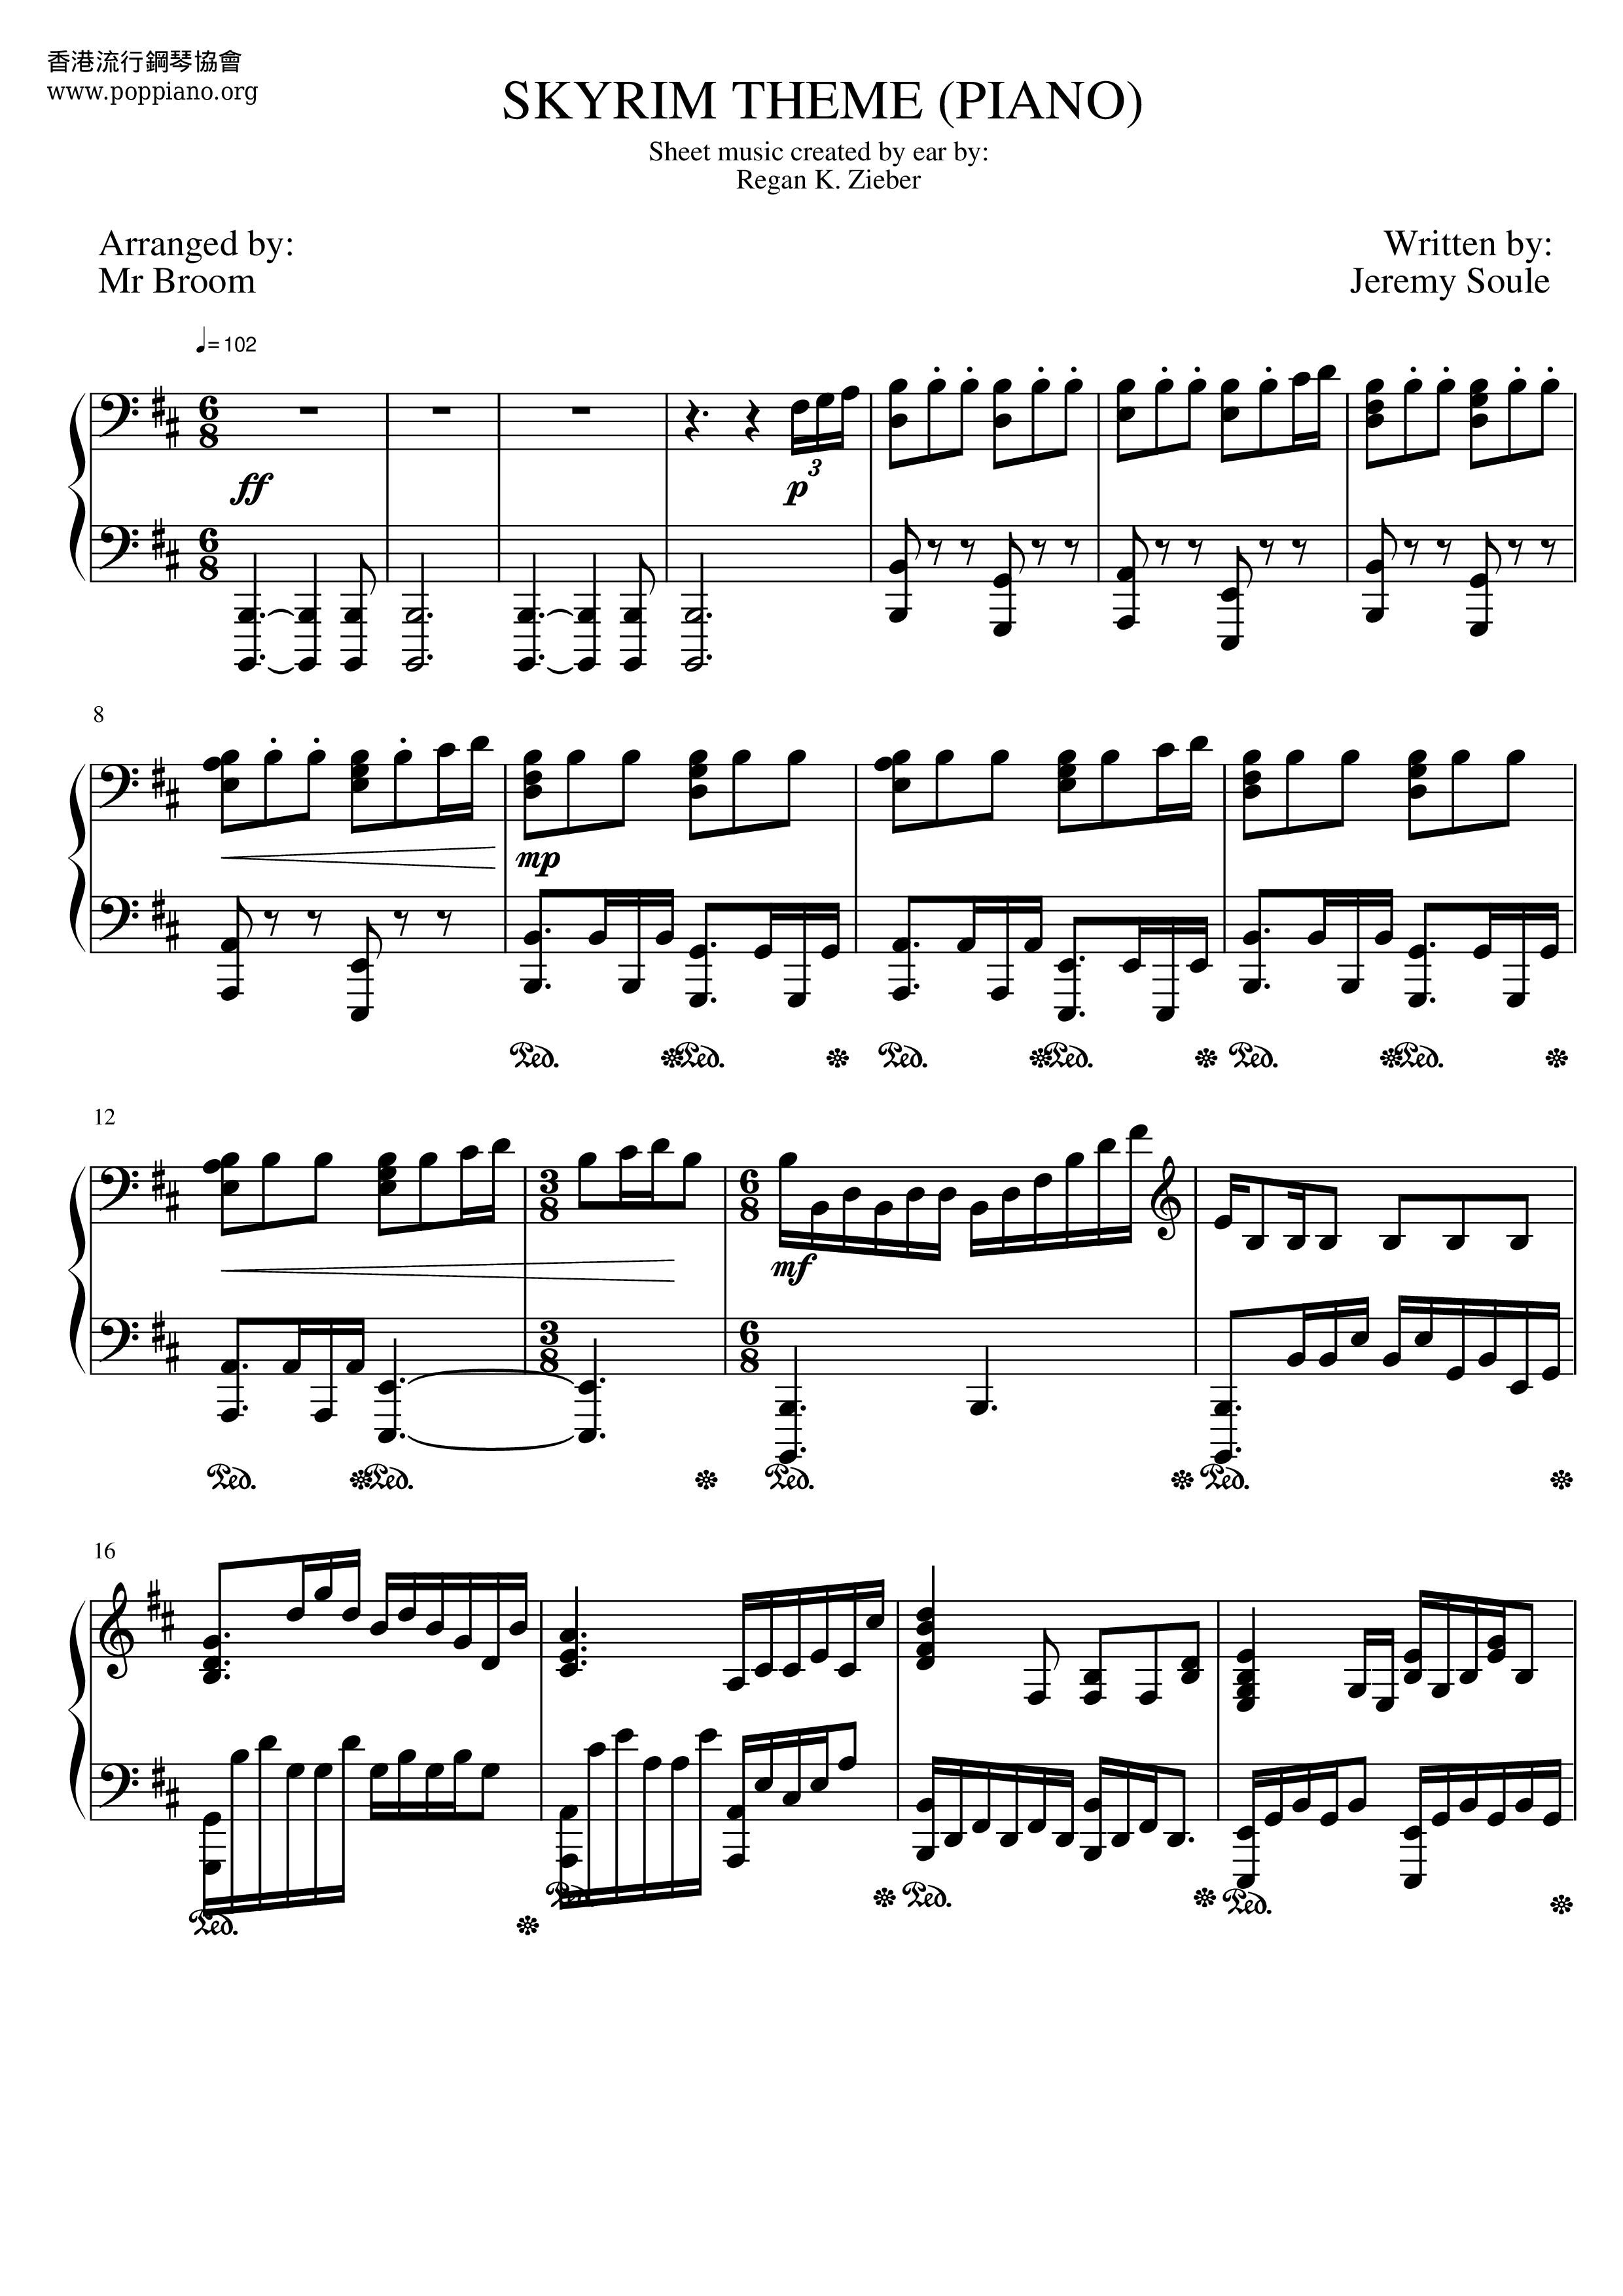 Skyrim Themeピアノ譜